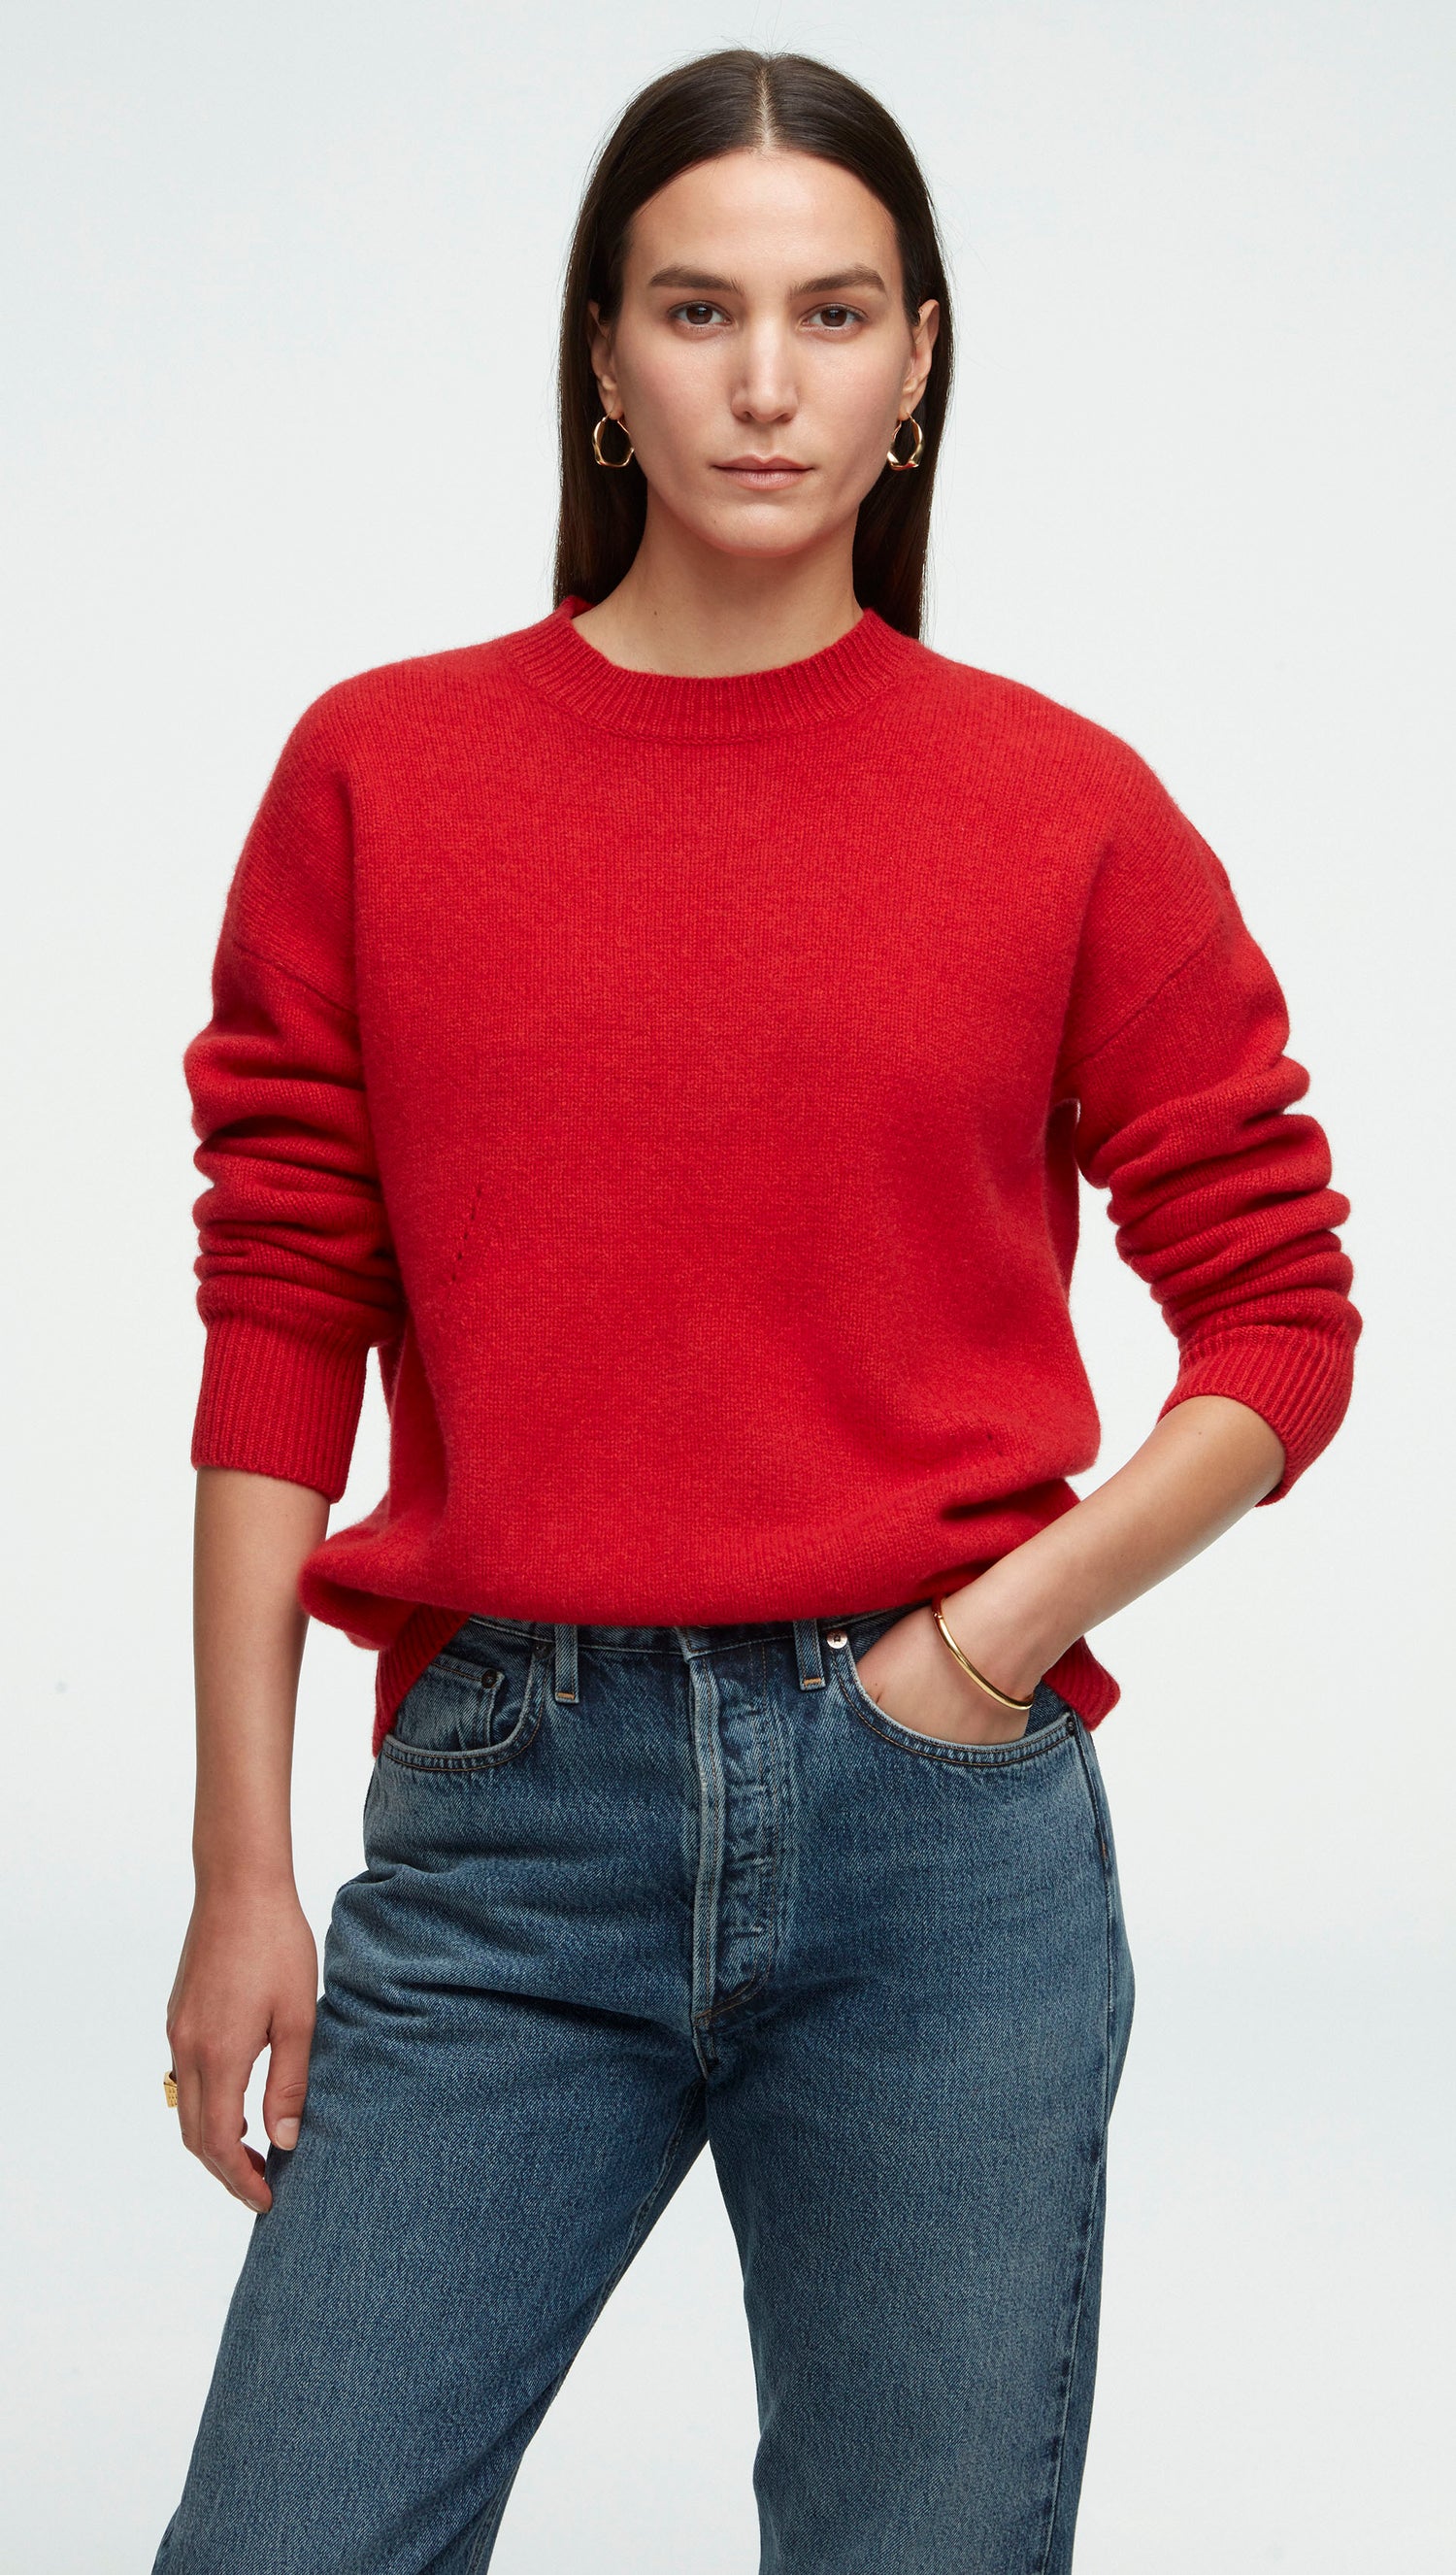 Chunky Red Sweater, Women Merino Wool Jumper, Giant Turtleneck Pullover,  Warm Oversized Sweater, Avant Garde Clothing, Girlfriend Gift 